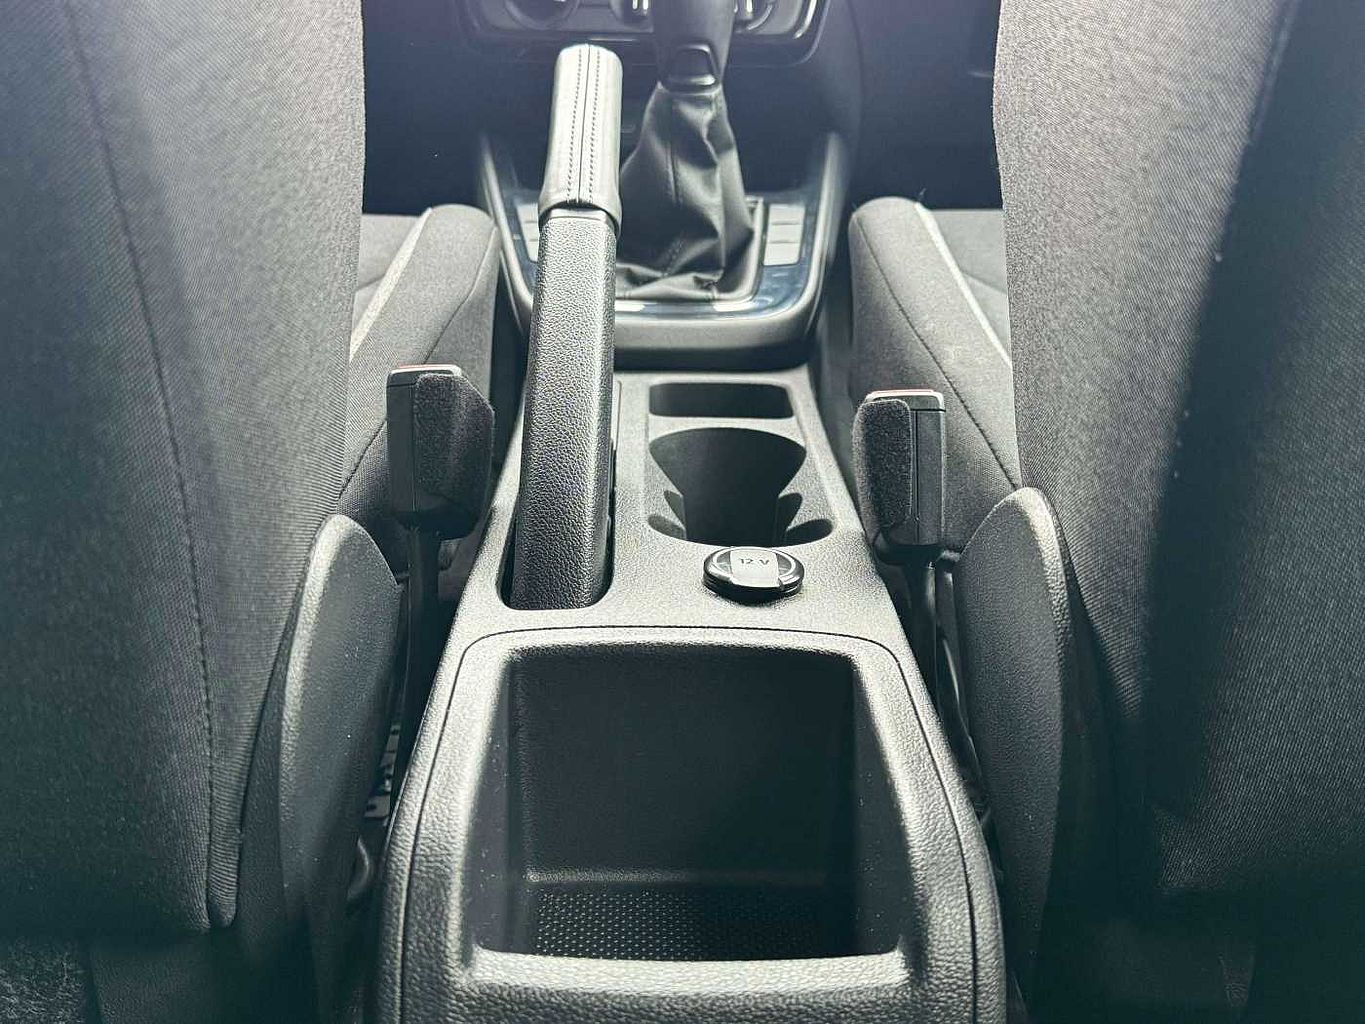 SKODA Fabia 1.0 TSI (95ps) SE Comfort 5-Dr Hatchback